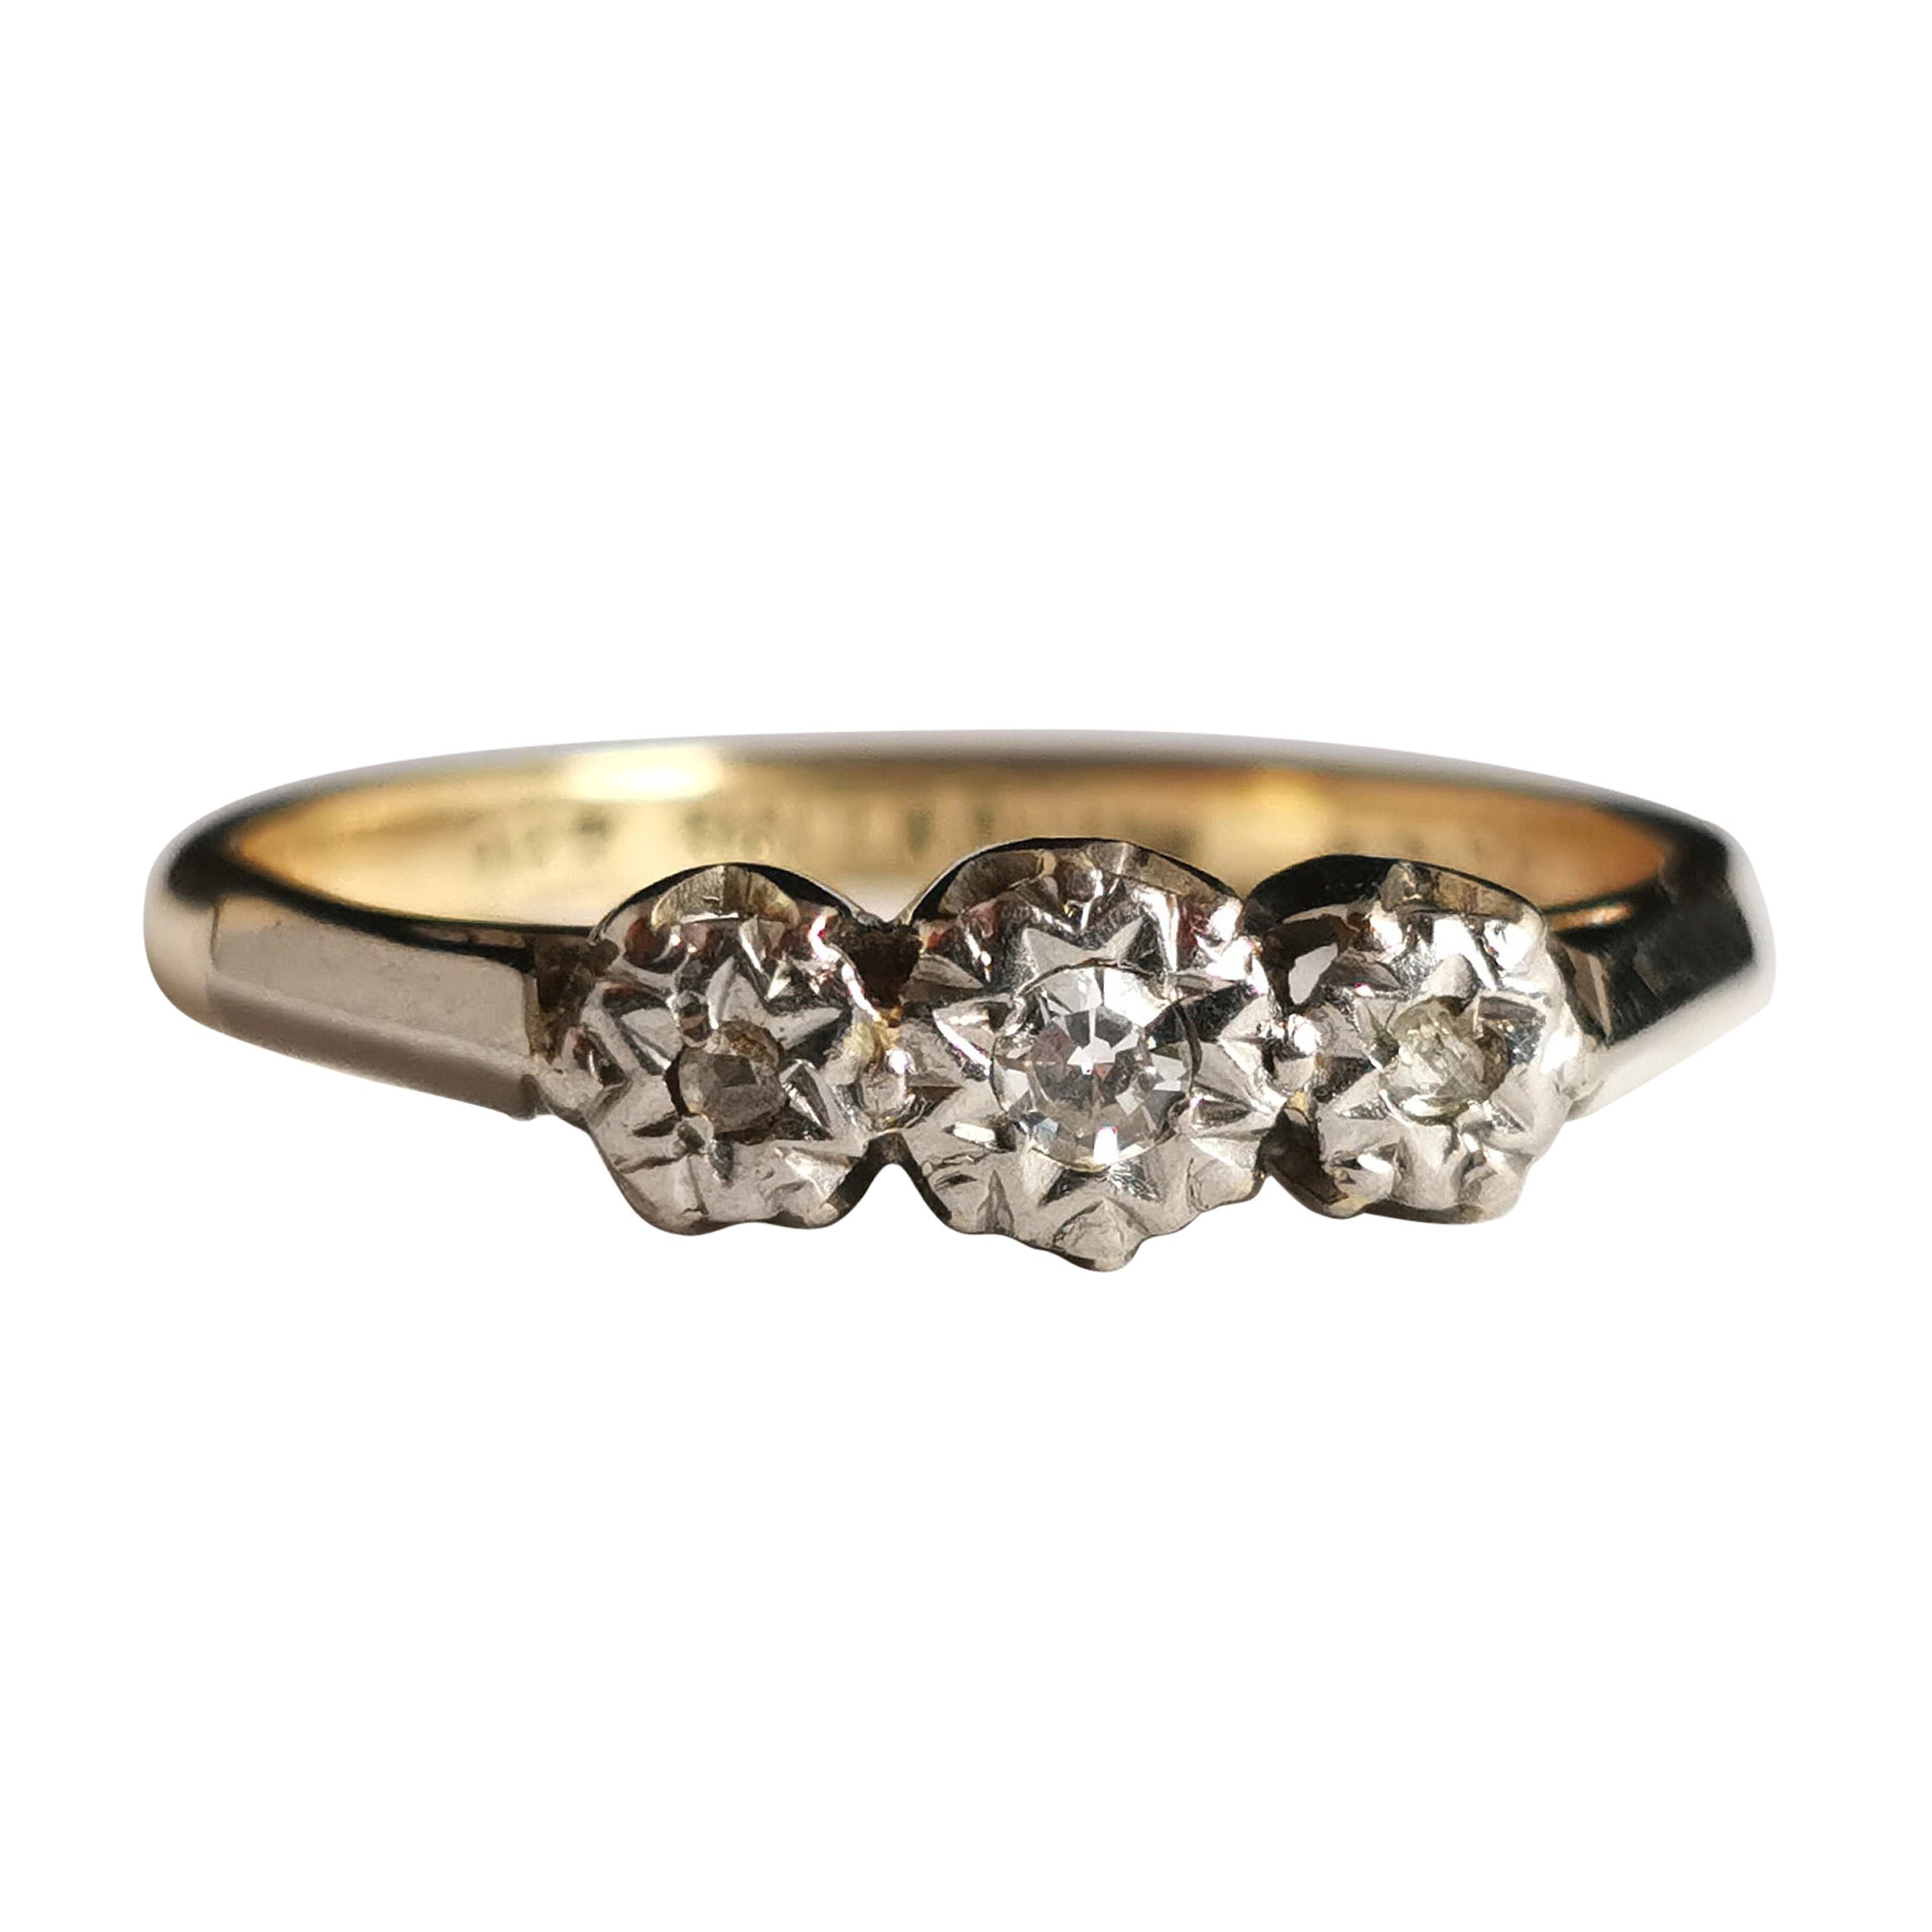 Vintage Art Deco Three Stone Diamond Ring, 9k Gold and Palladium